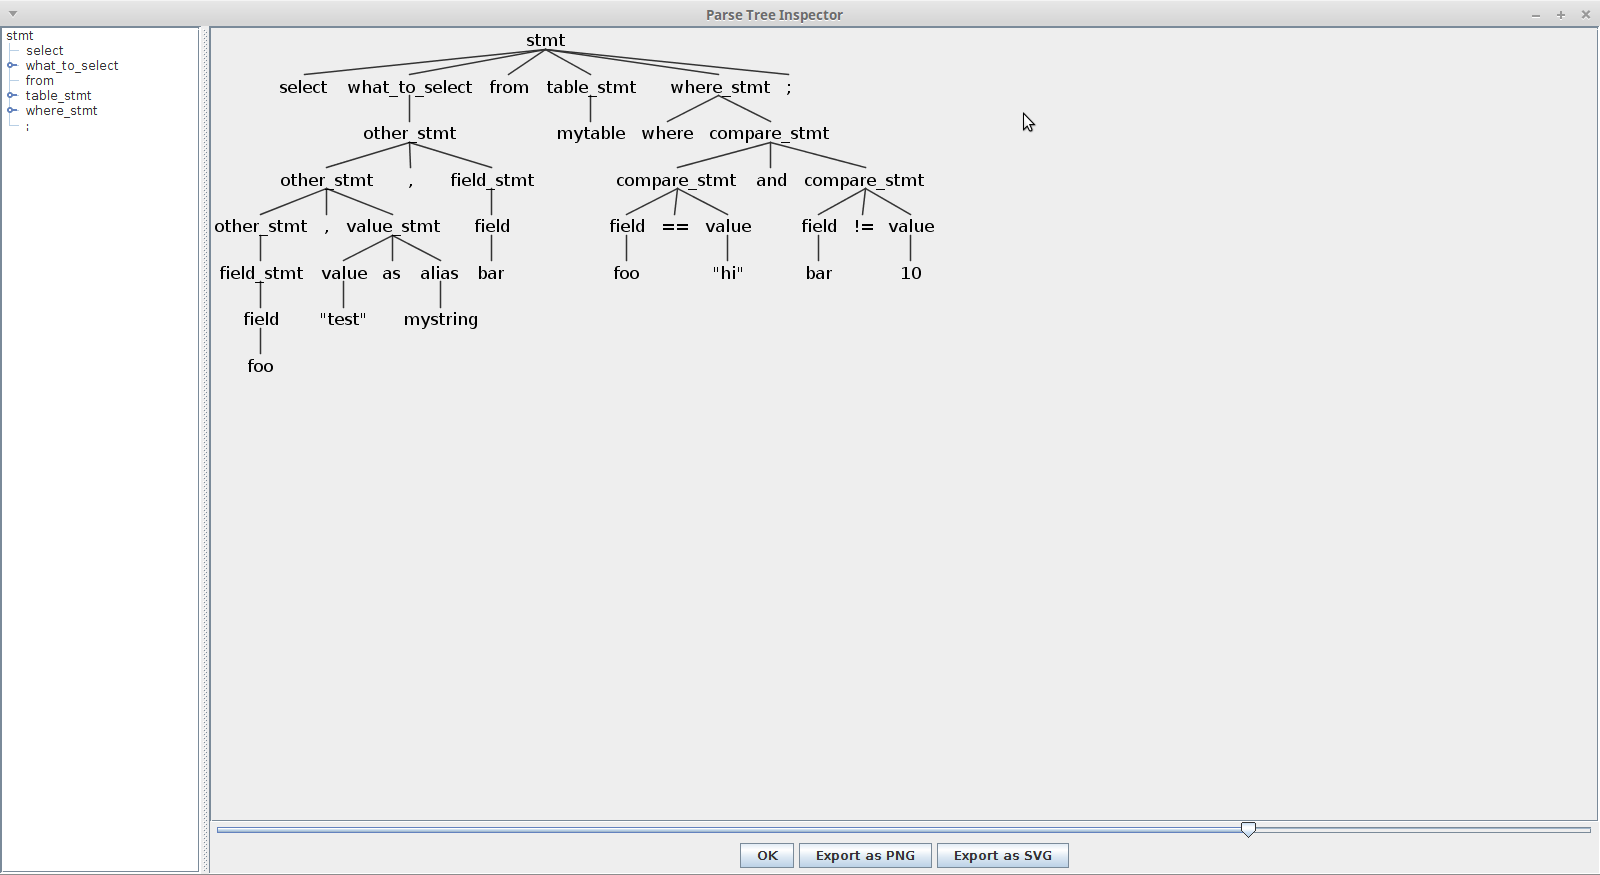 toySQL-parse-tree-screenshot.png